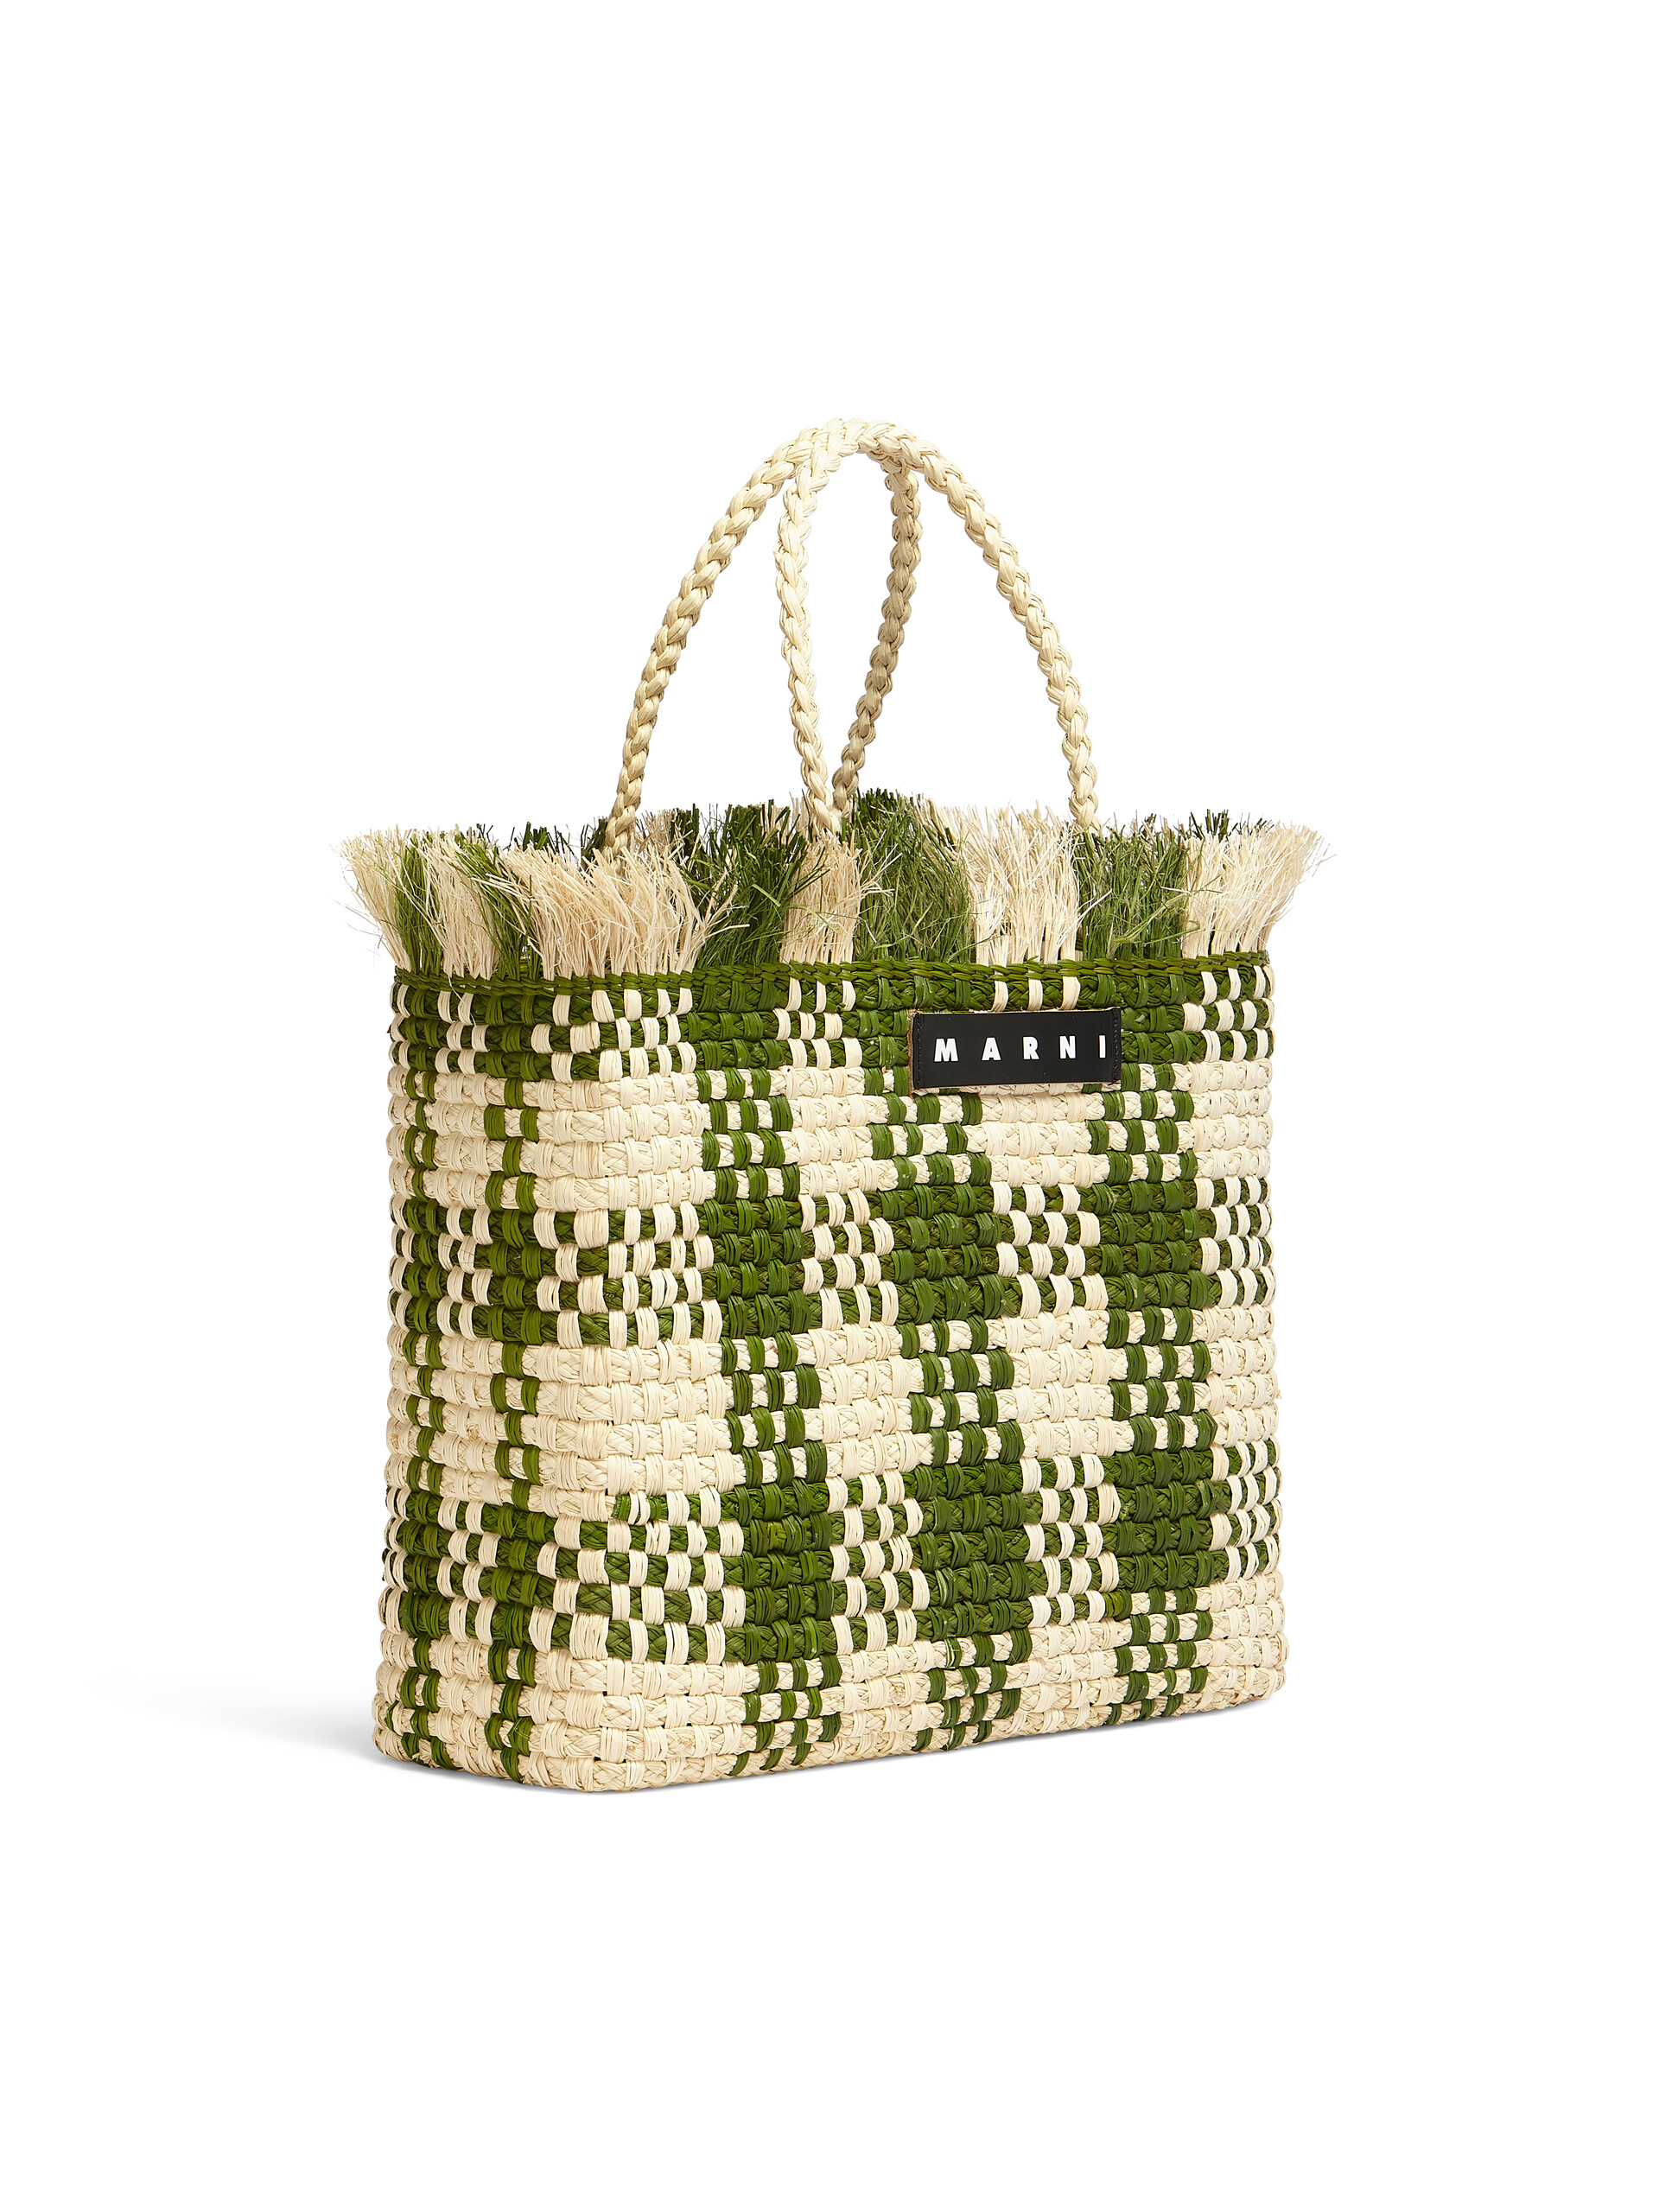 MARNI MARKET medium bag in green natural fiber - Shopping Bags - Image 2